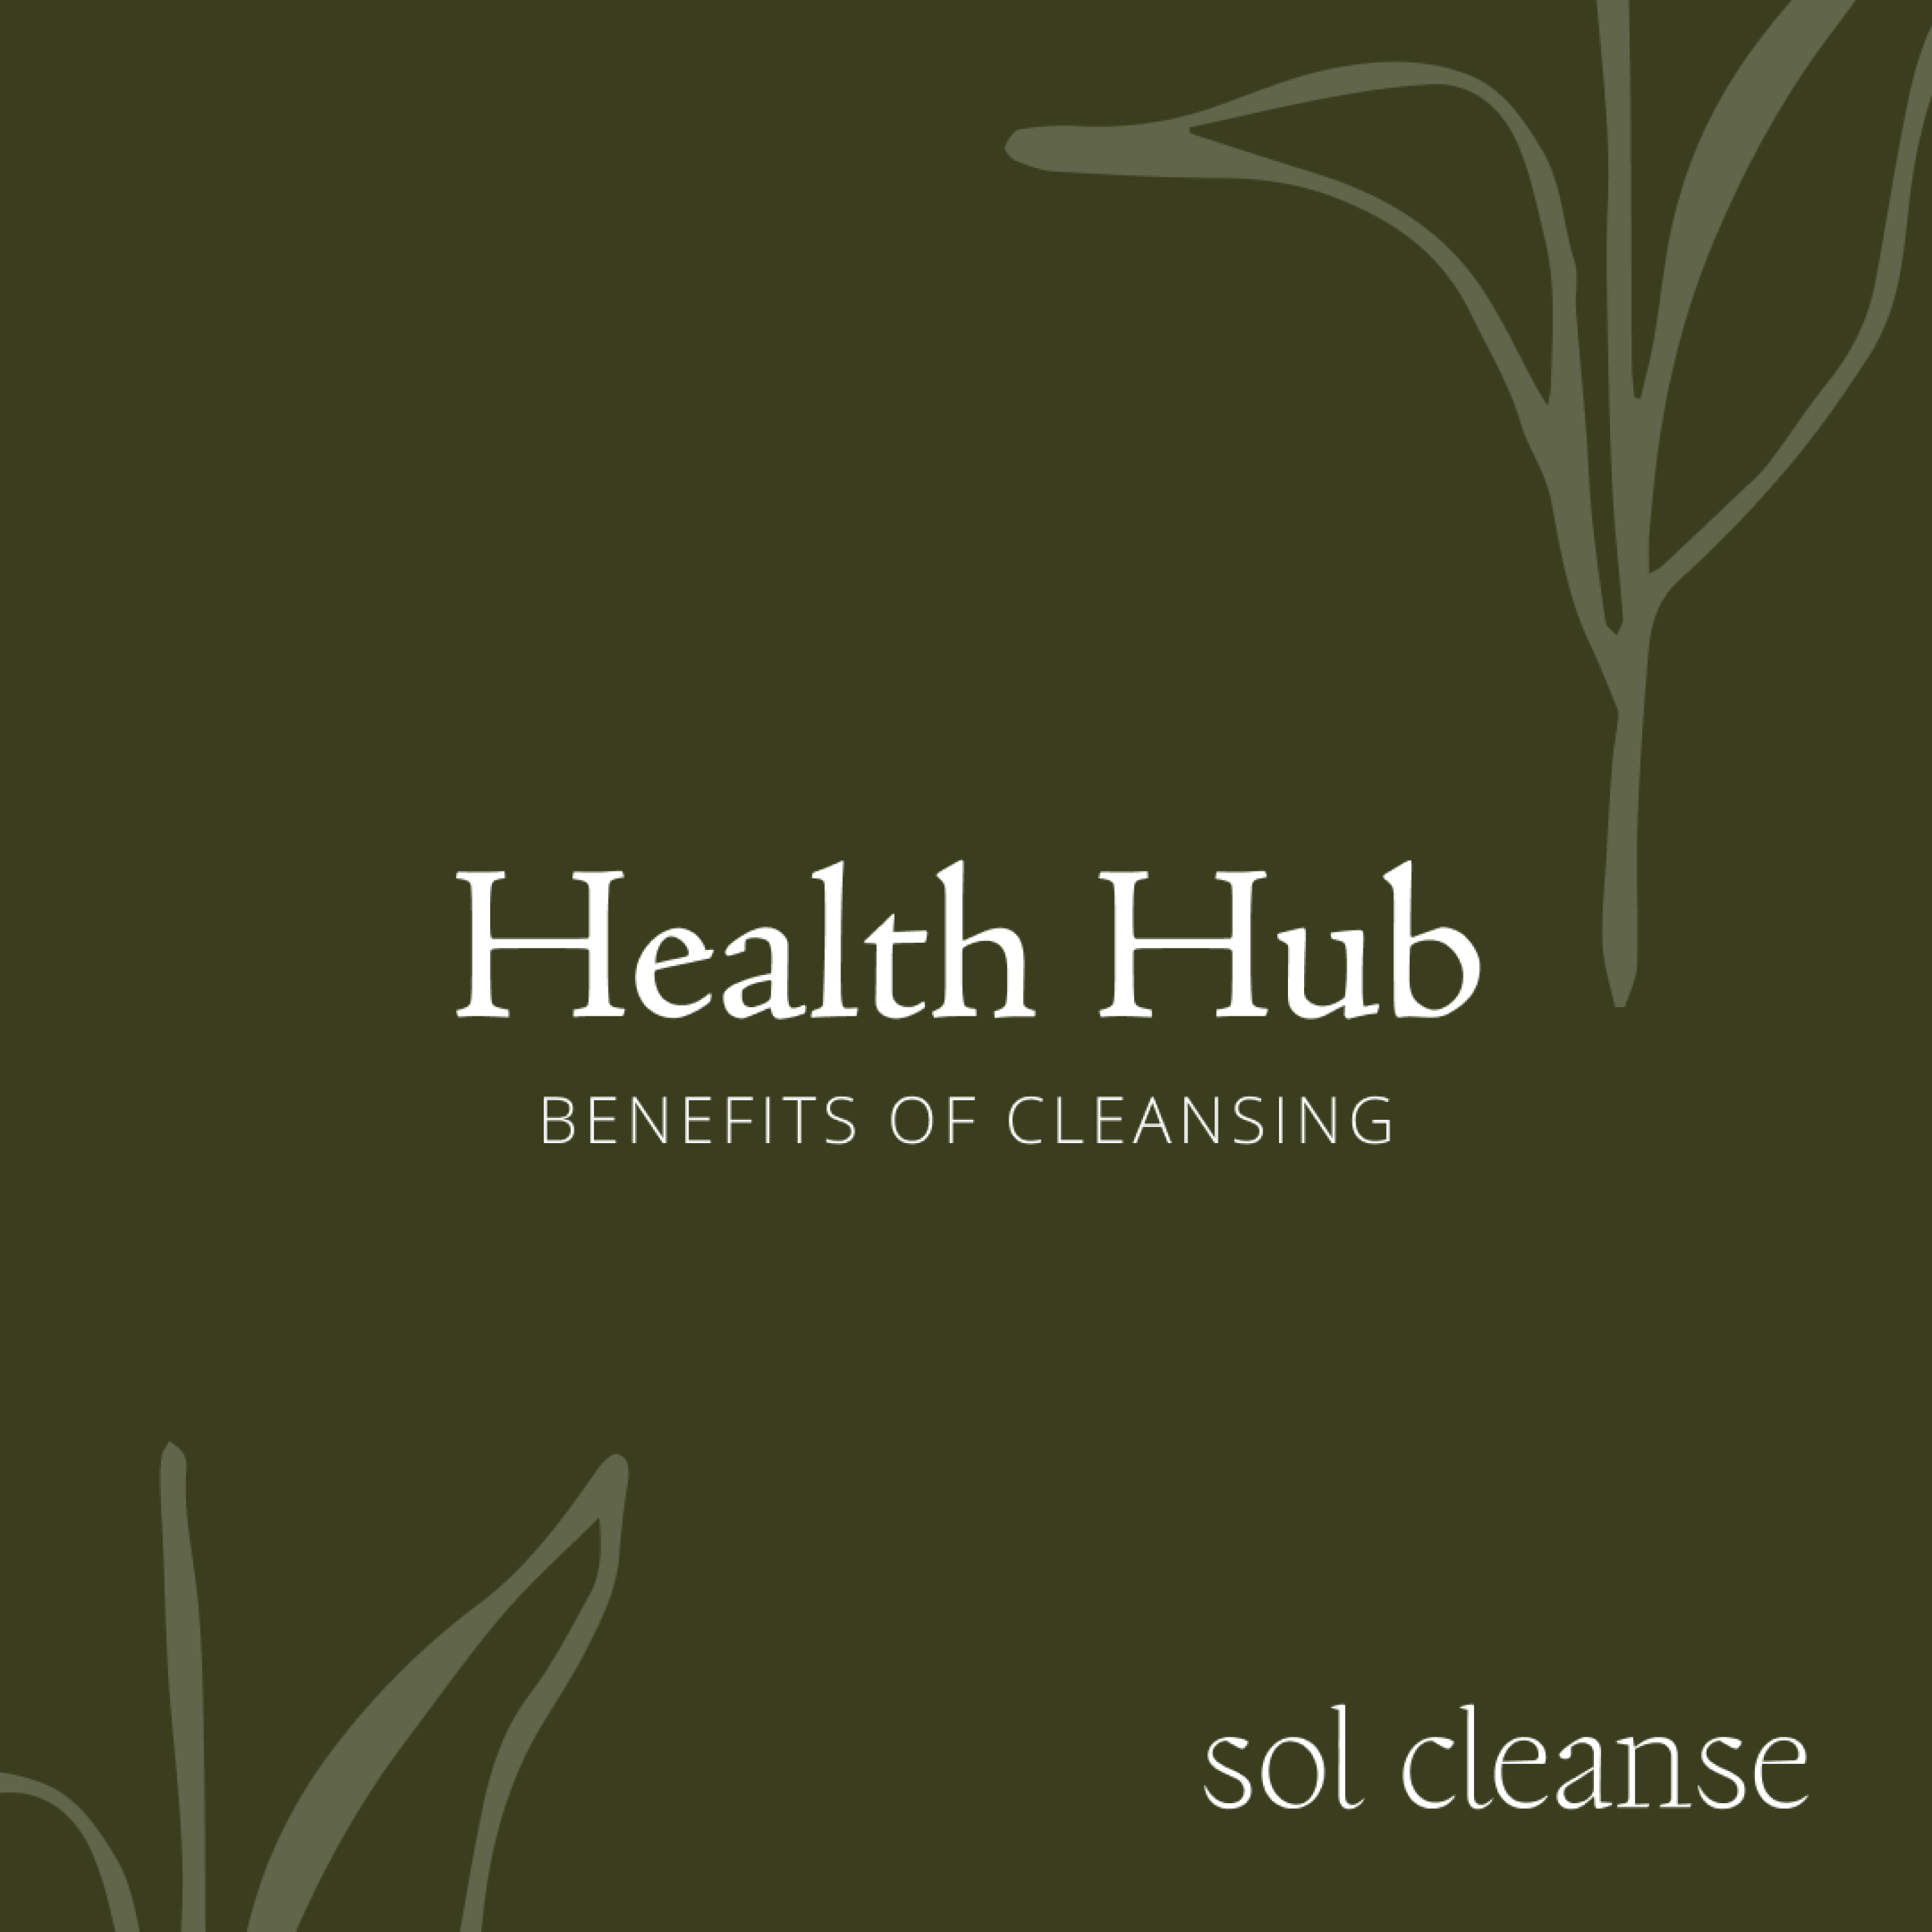 Heath Hub: Benefits of Cleansing